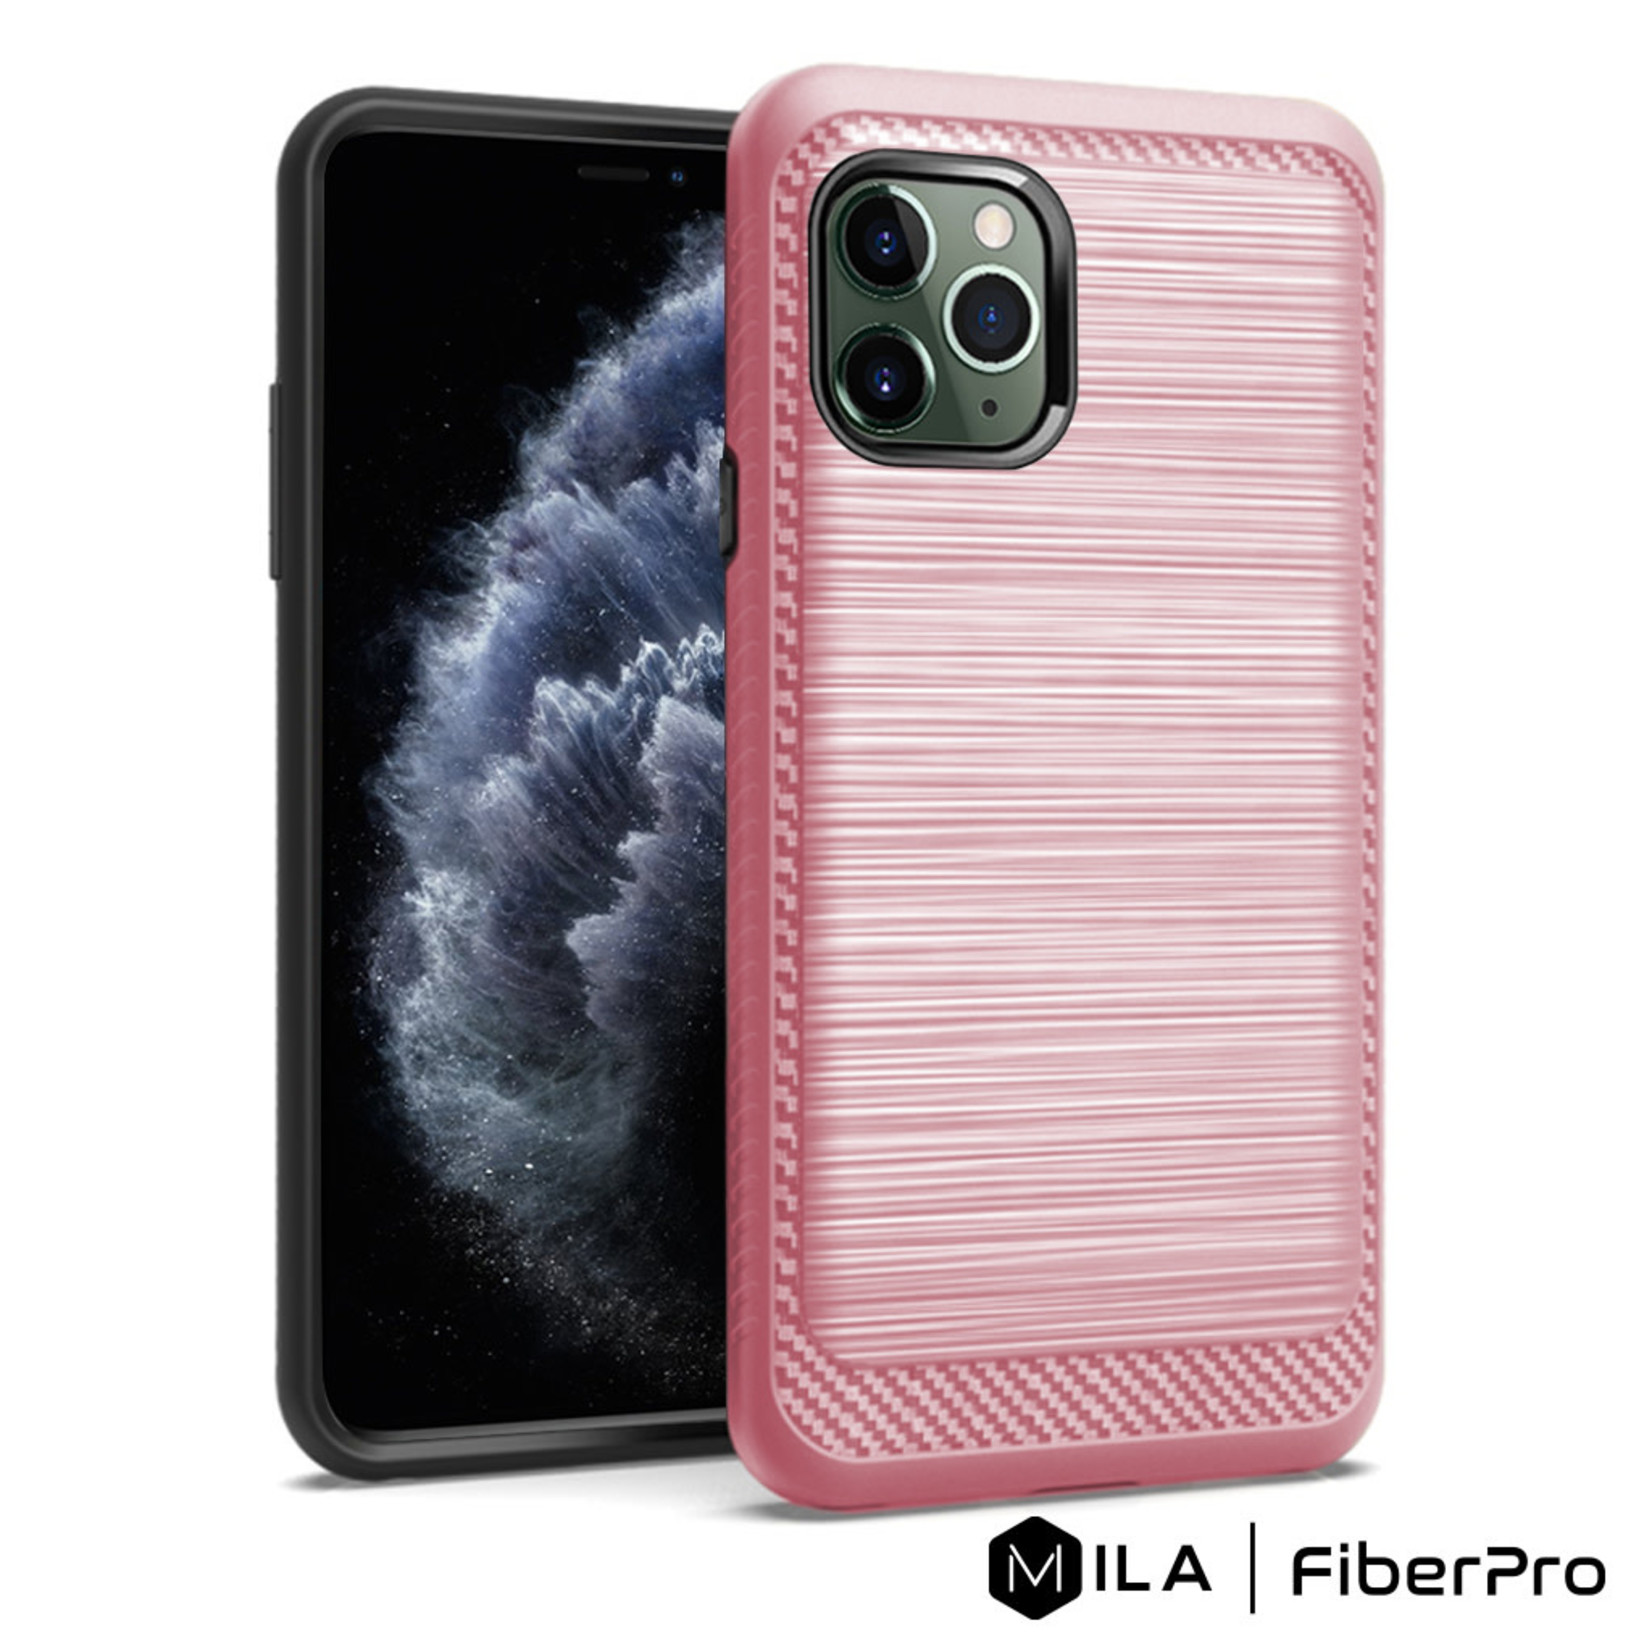 MILA | FiberPro Case for iPhone 11 Pro Max